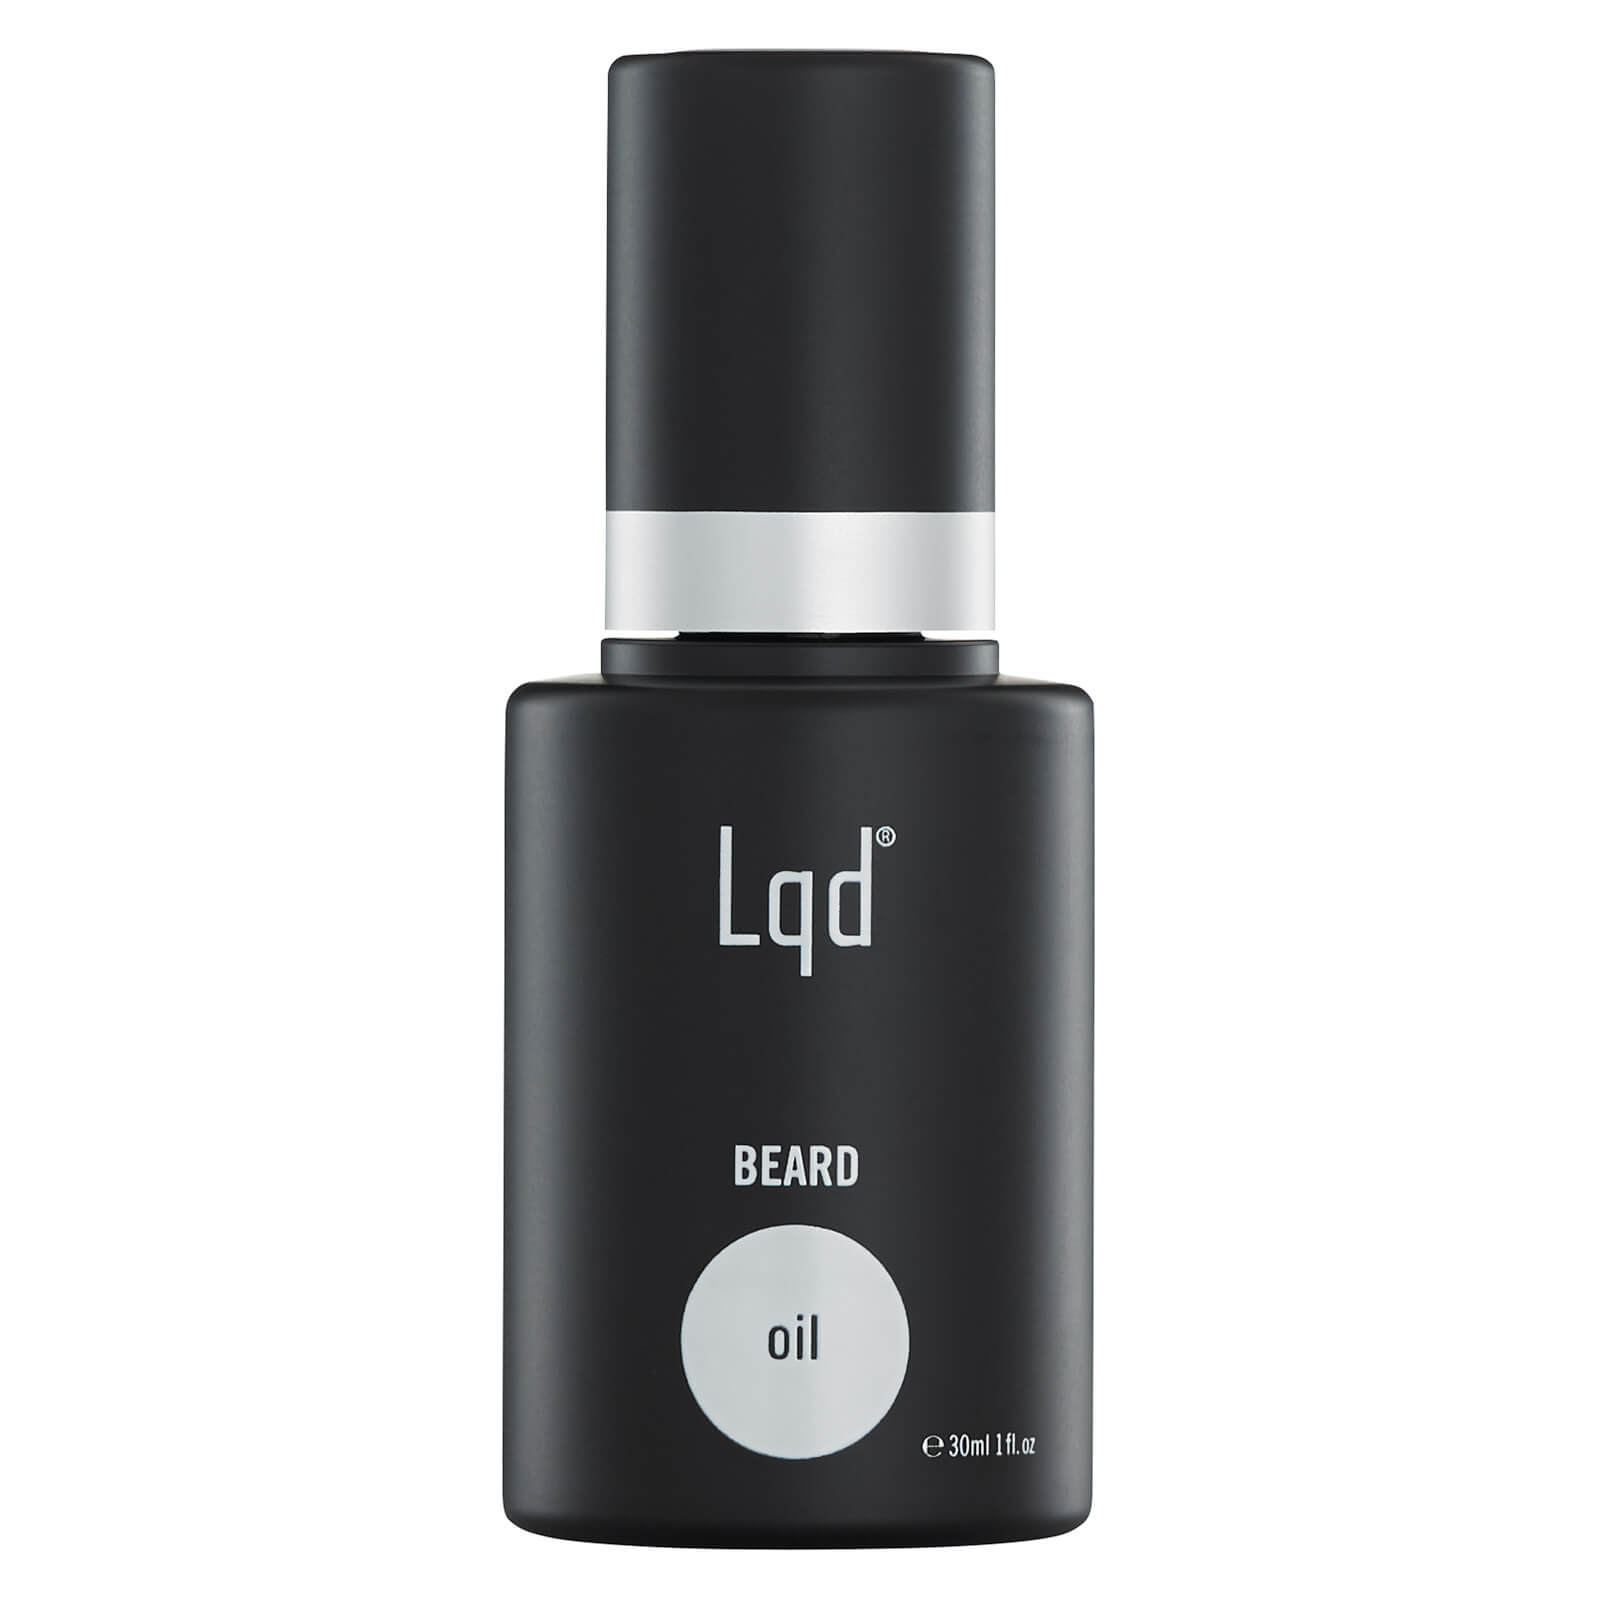 Lqd Skin Care Beard Oil 30ml